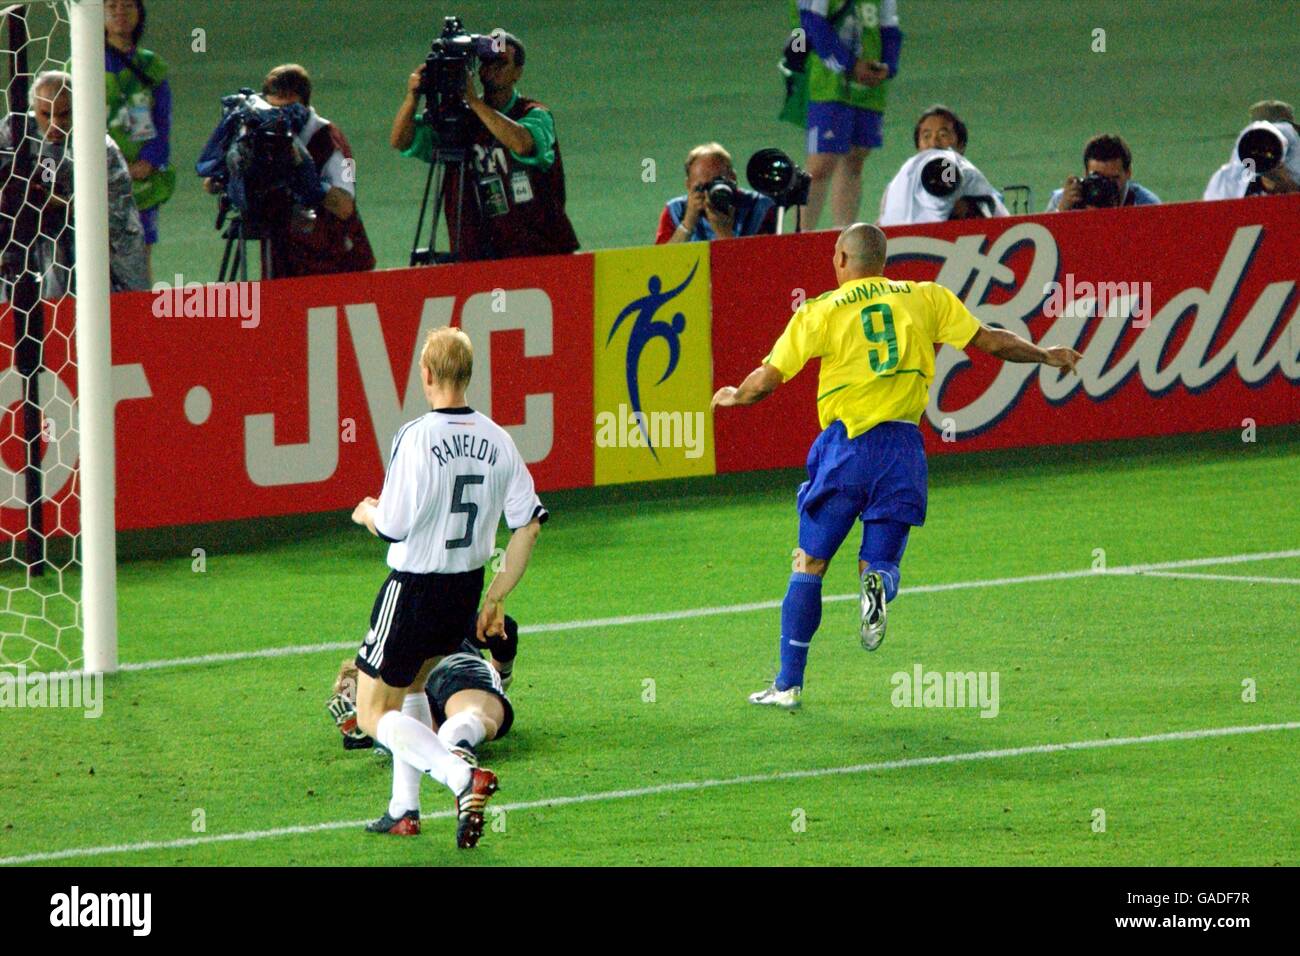 Soccer - FIFA World Cup 2002 - Final - Germany v Brazil. Brazil's Ronaldo (r) puts the ball past German goalkeeper Oliver Kahn (hidden) as Carsten Ramelow (l) looks on in despair Stock Photo